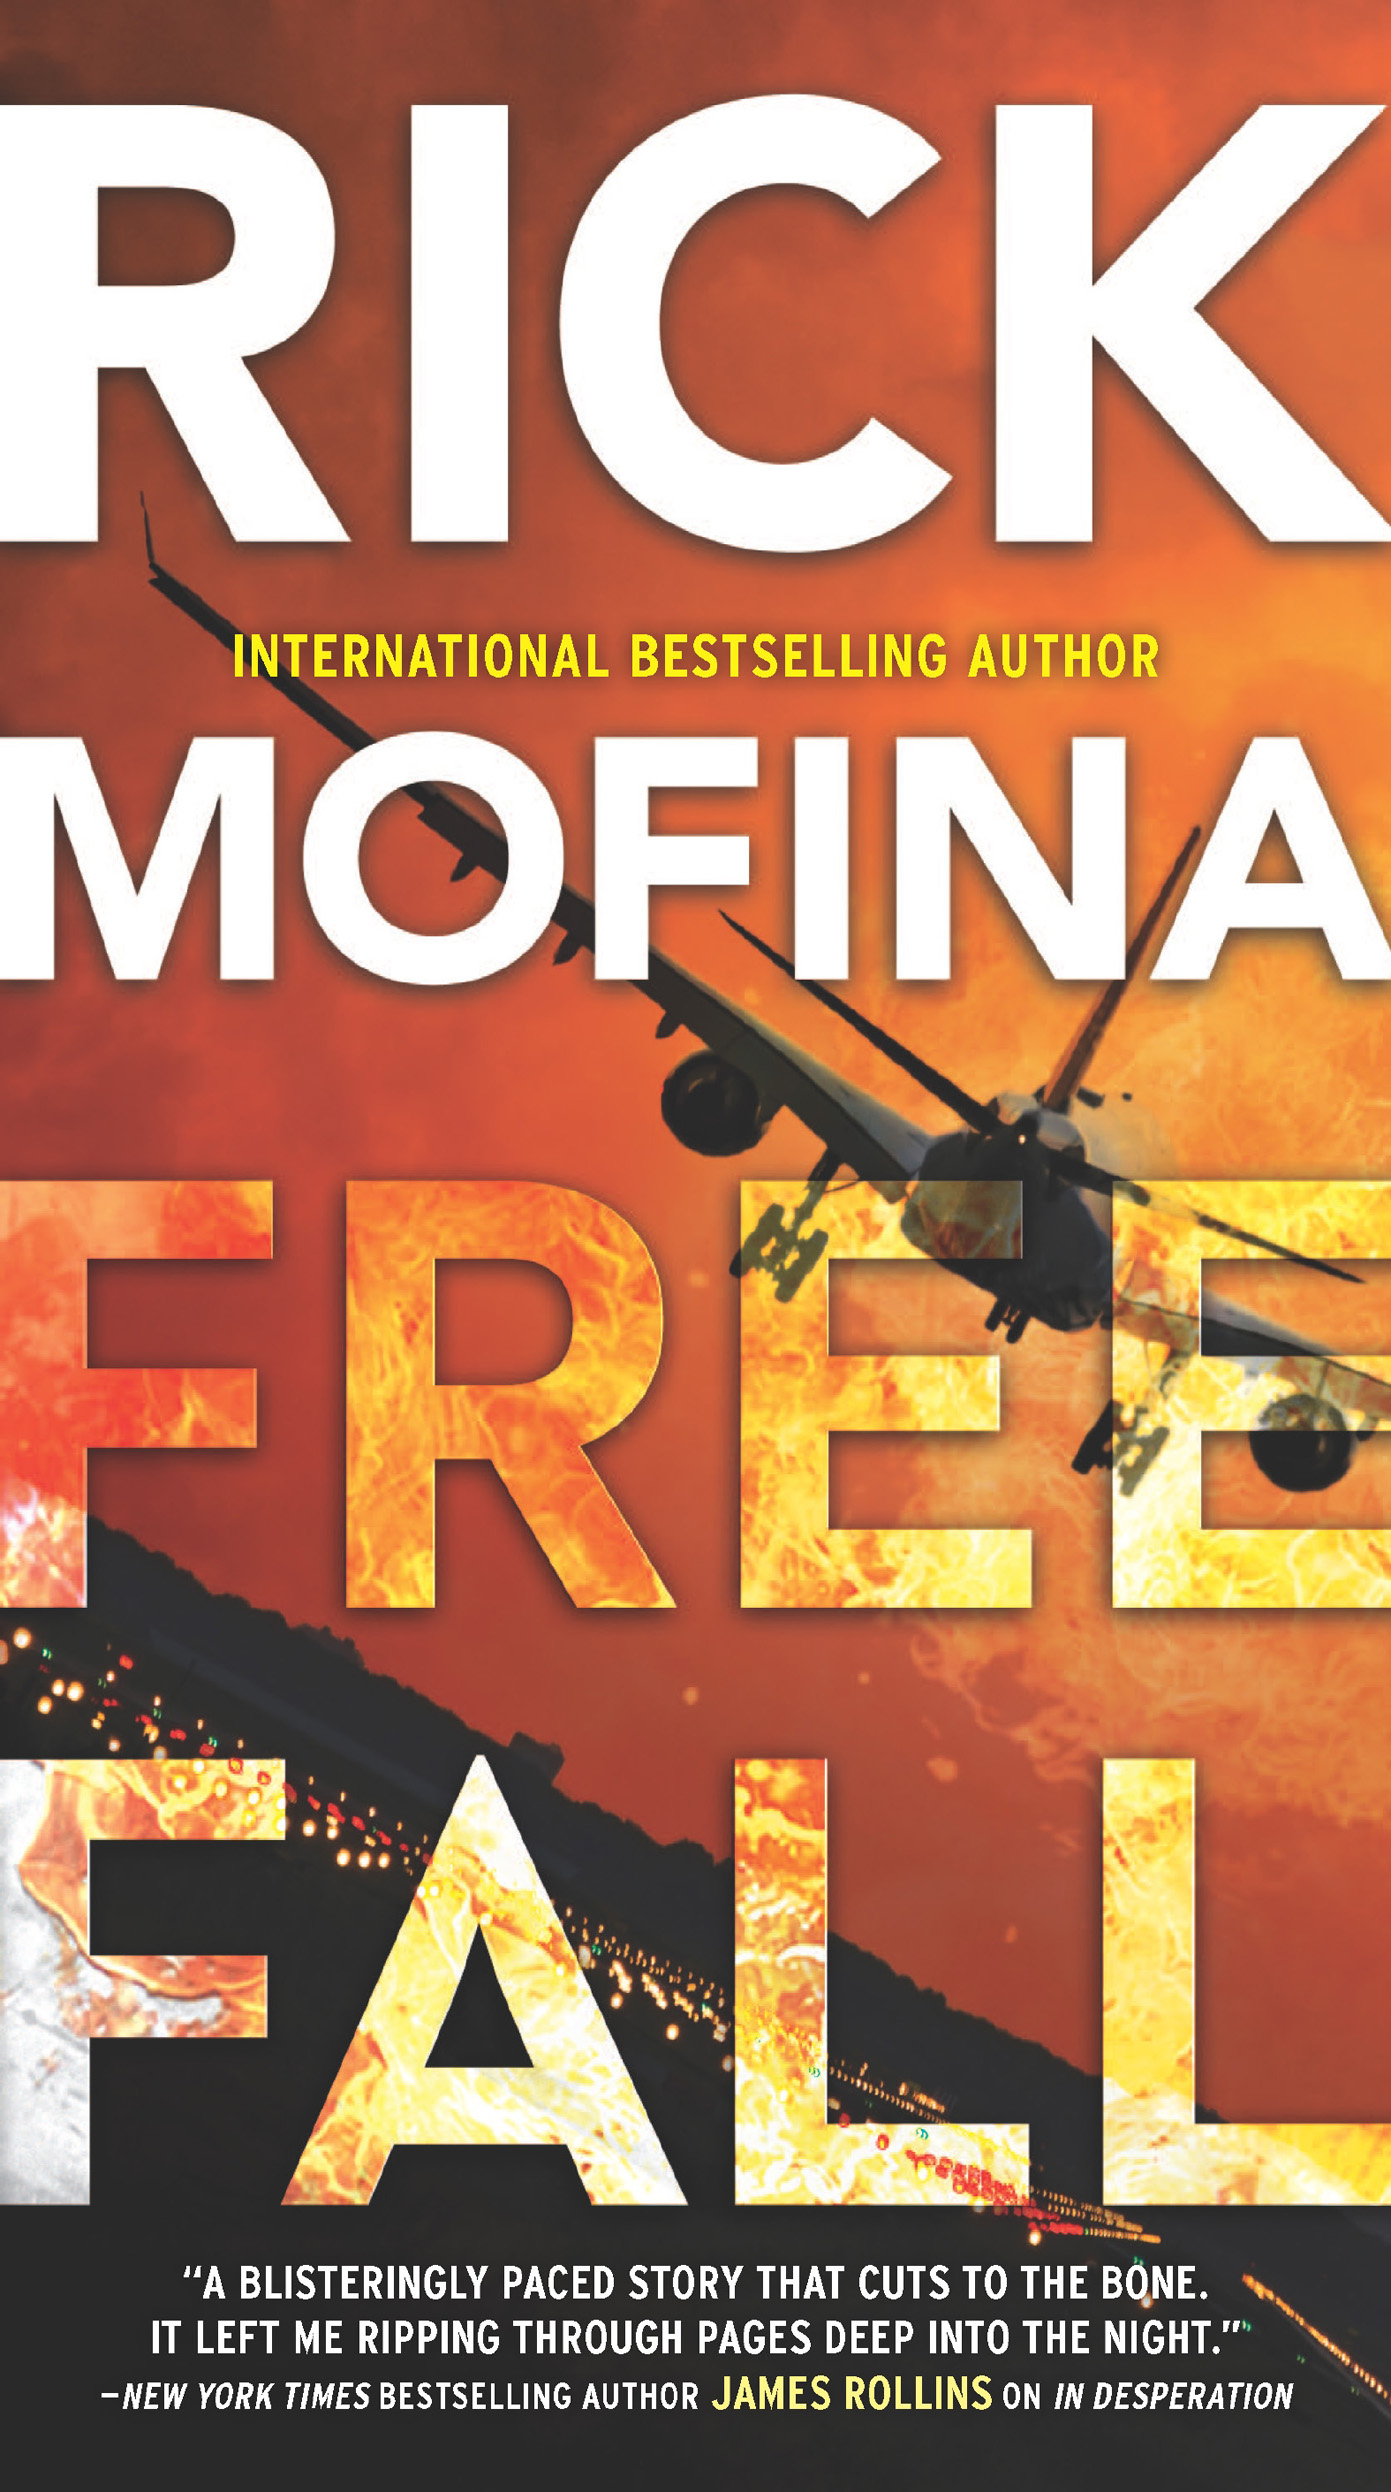 Free Fall (2016) by Rick Mofina